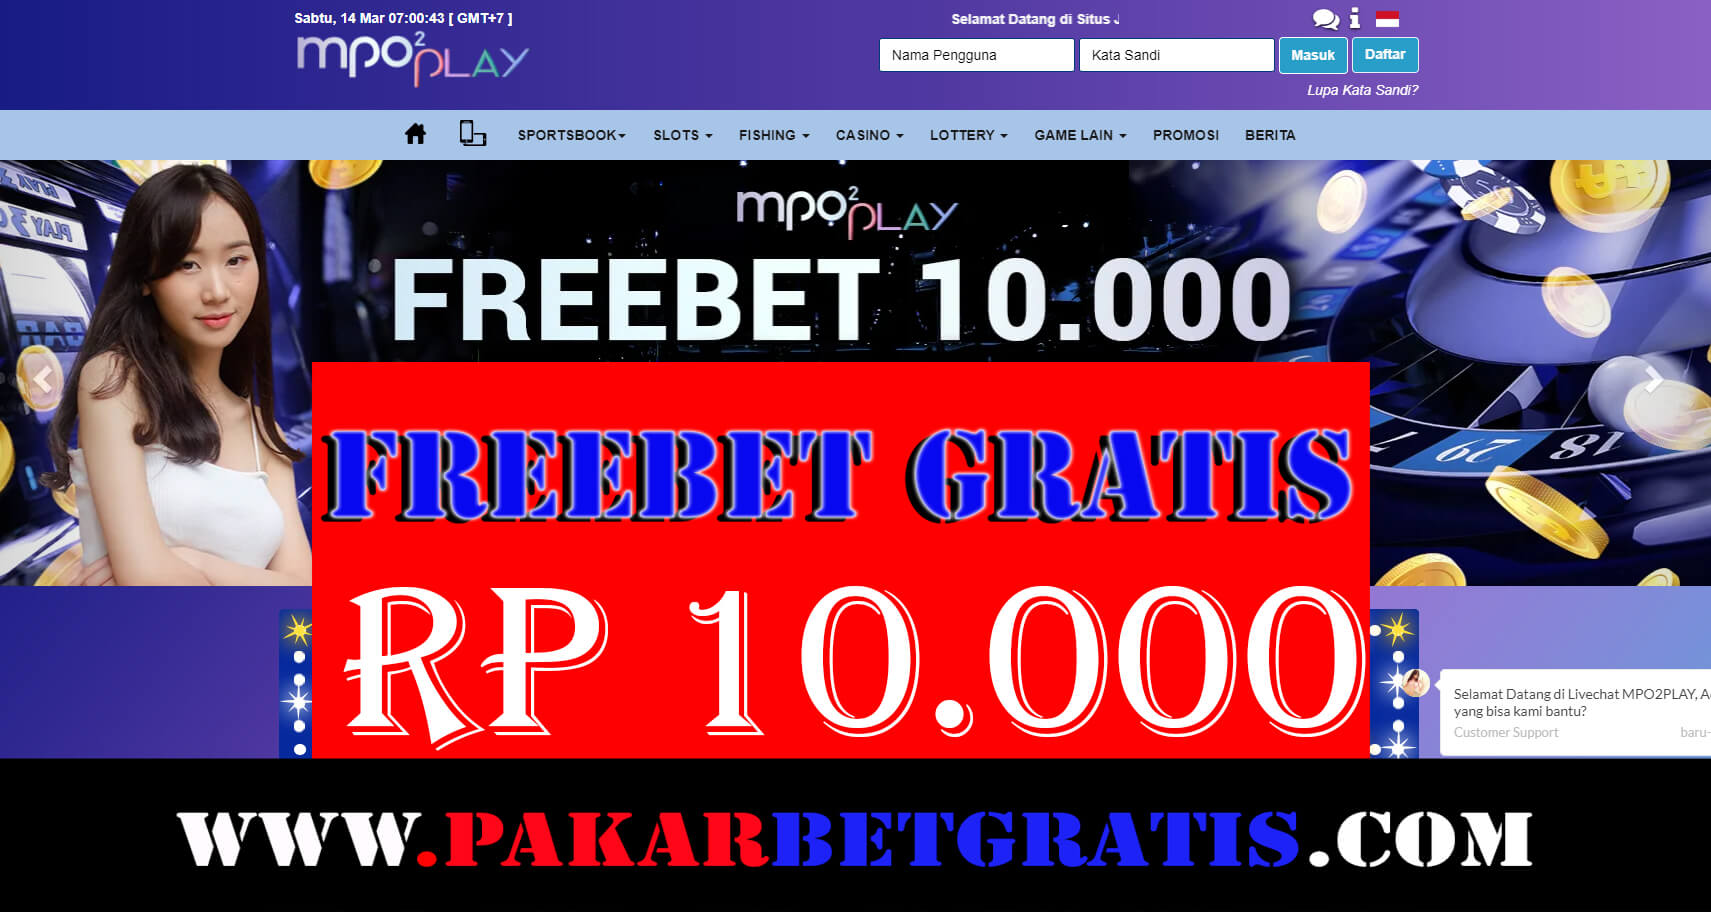 Freebet Gratis MPO2play RP 10.000 tanpa deposit